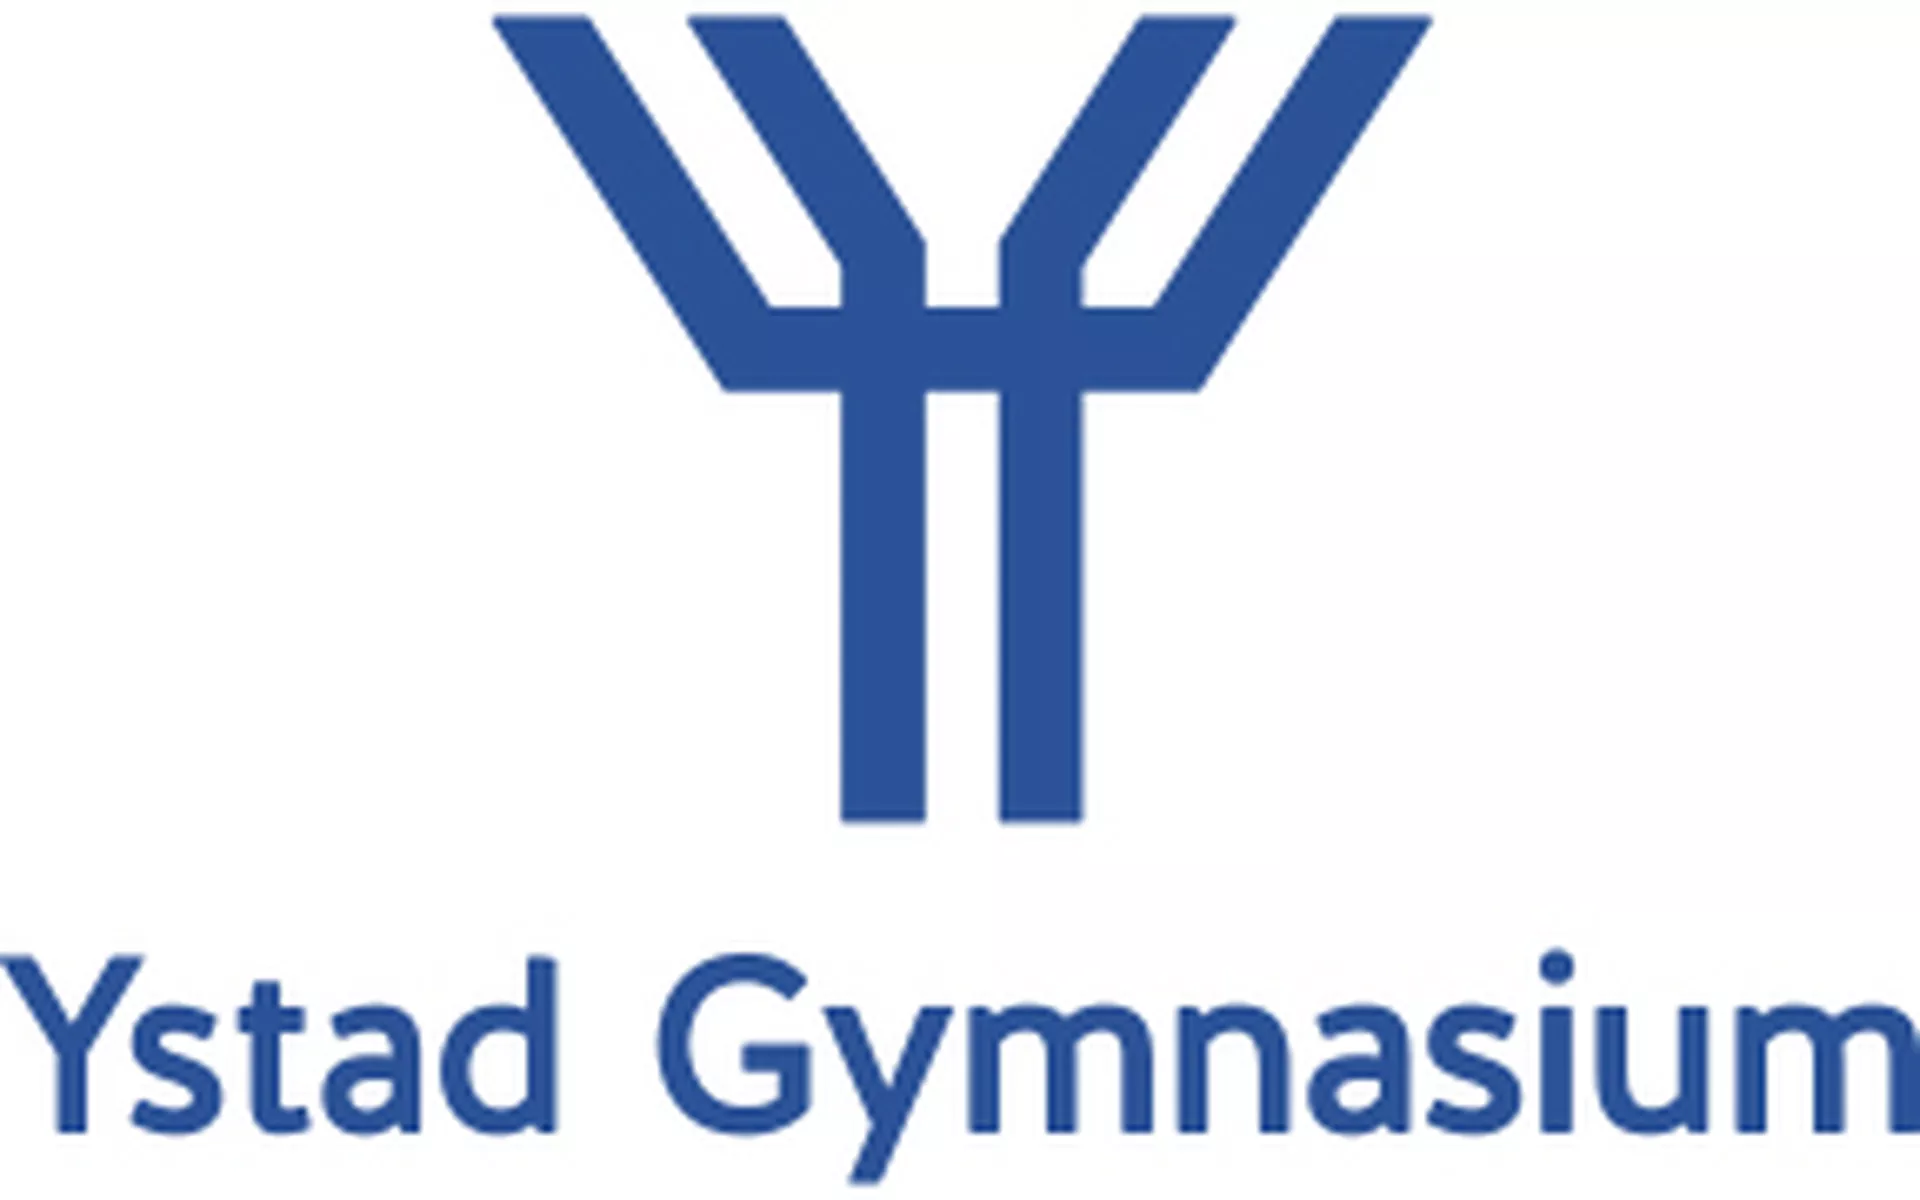 Ystad Gymnasium